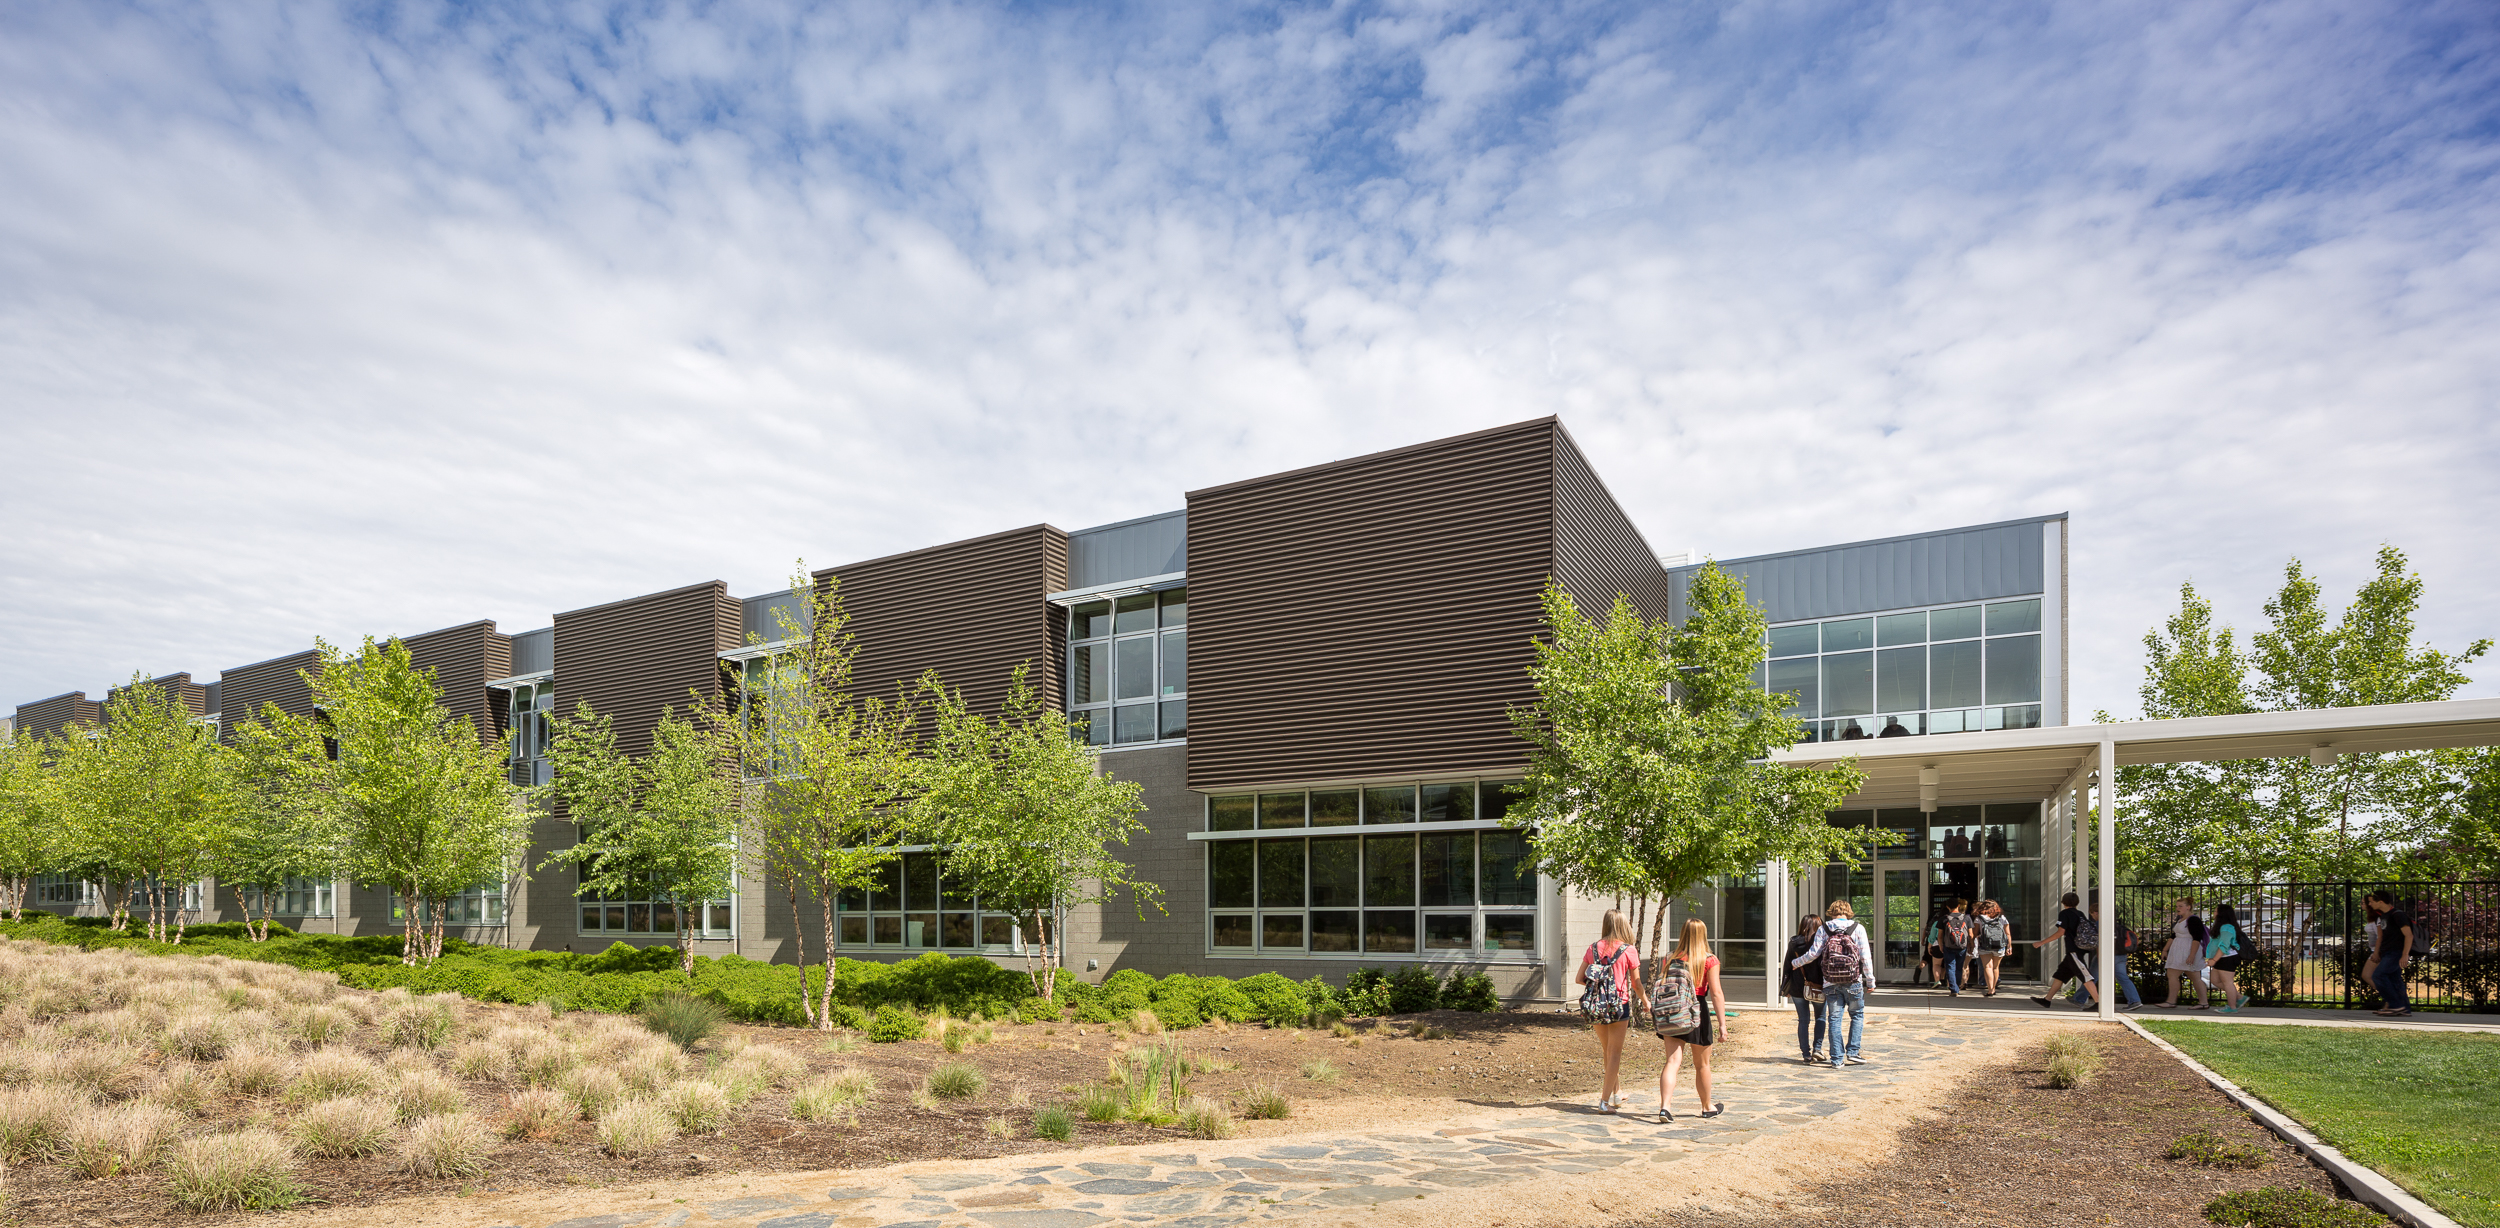  South Medford High School / Mahlum Architects 